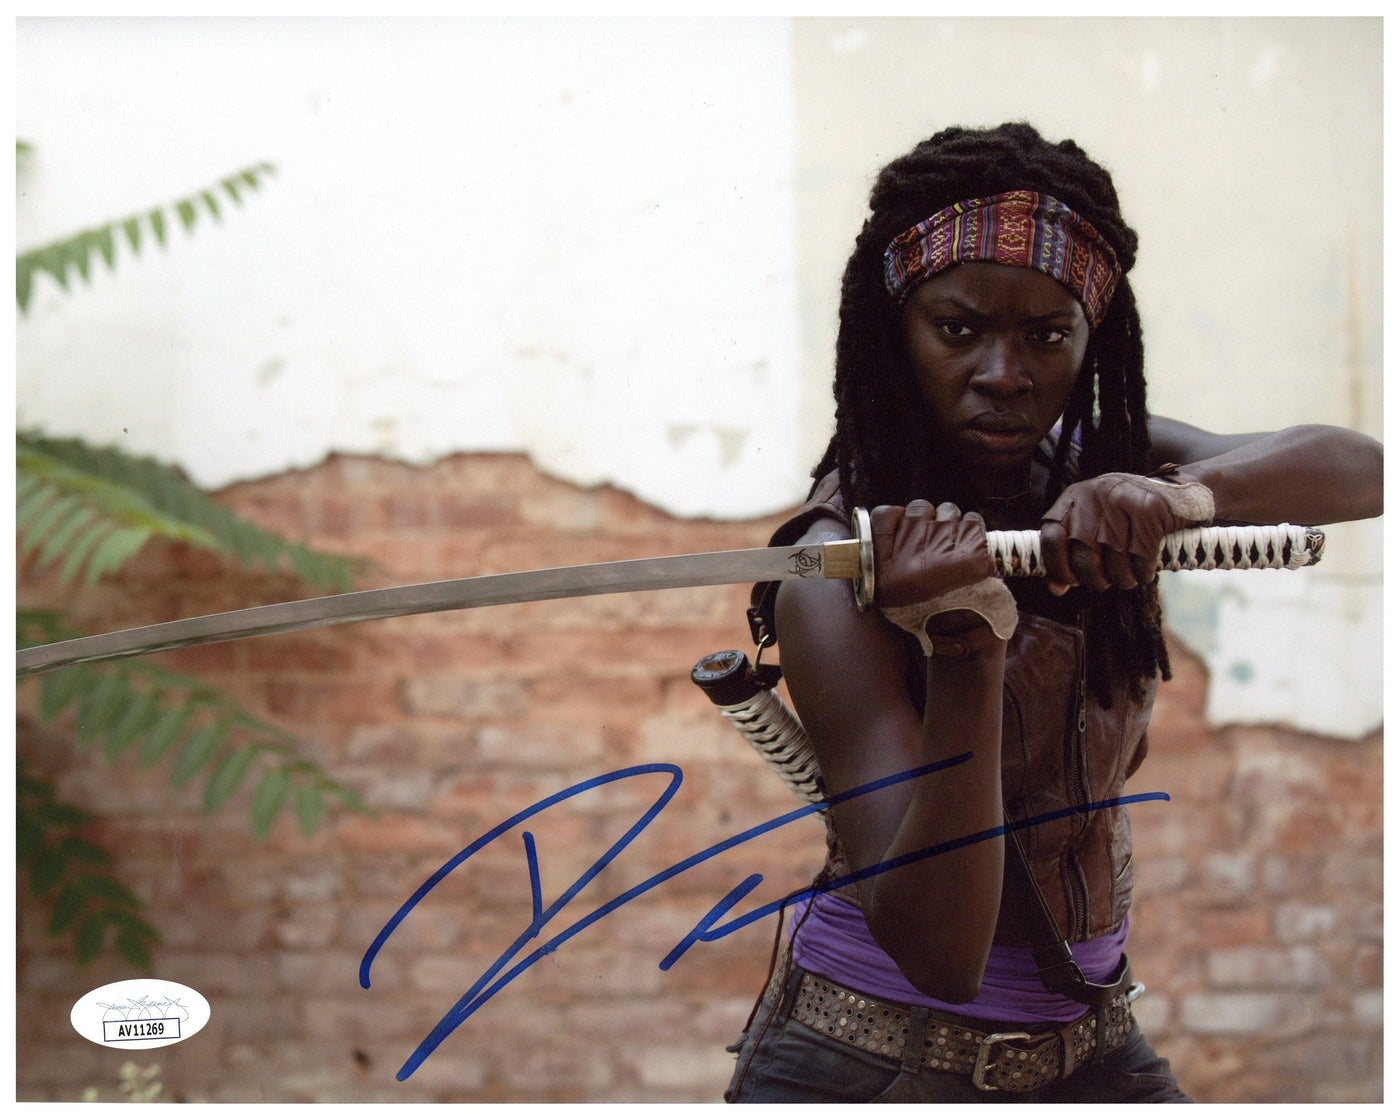 Danai Gurira Signed 8x10 Photo The Walking Dead Michonne Autographed JSA COA #2